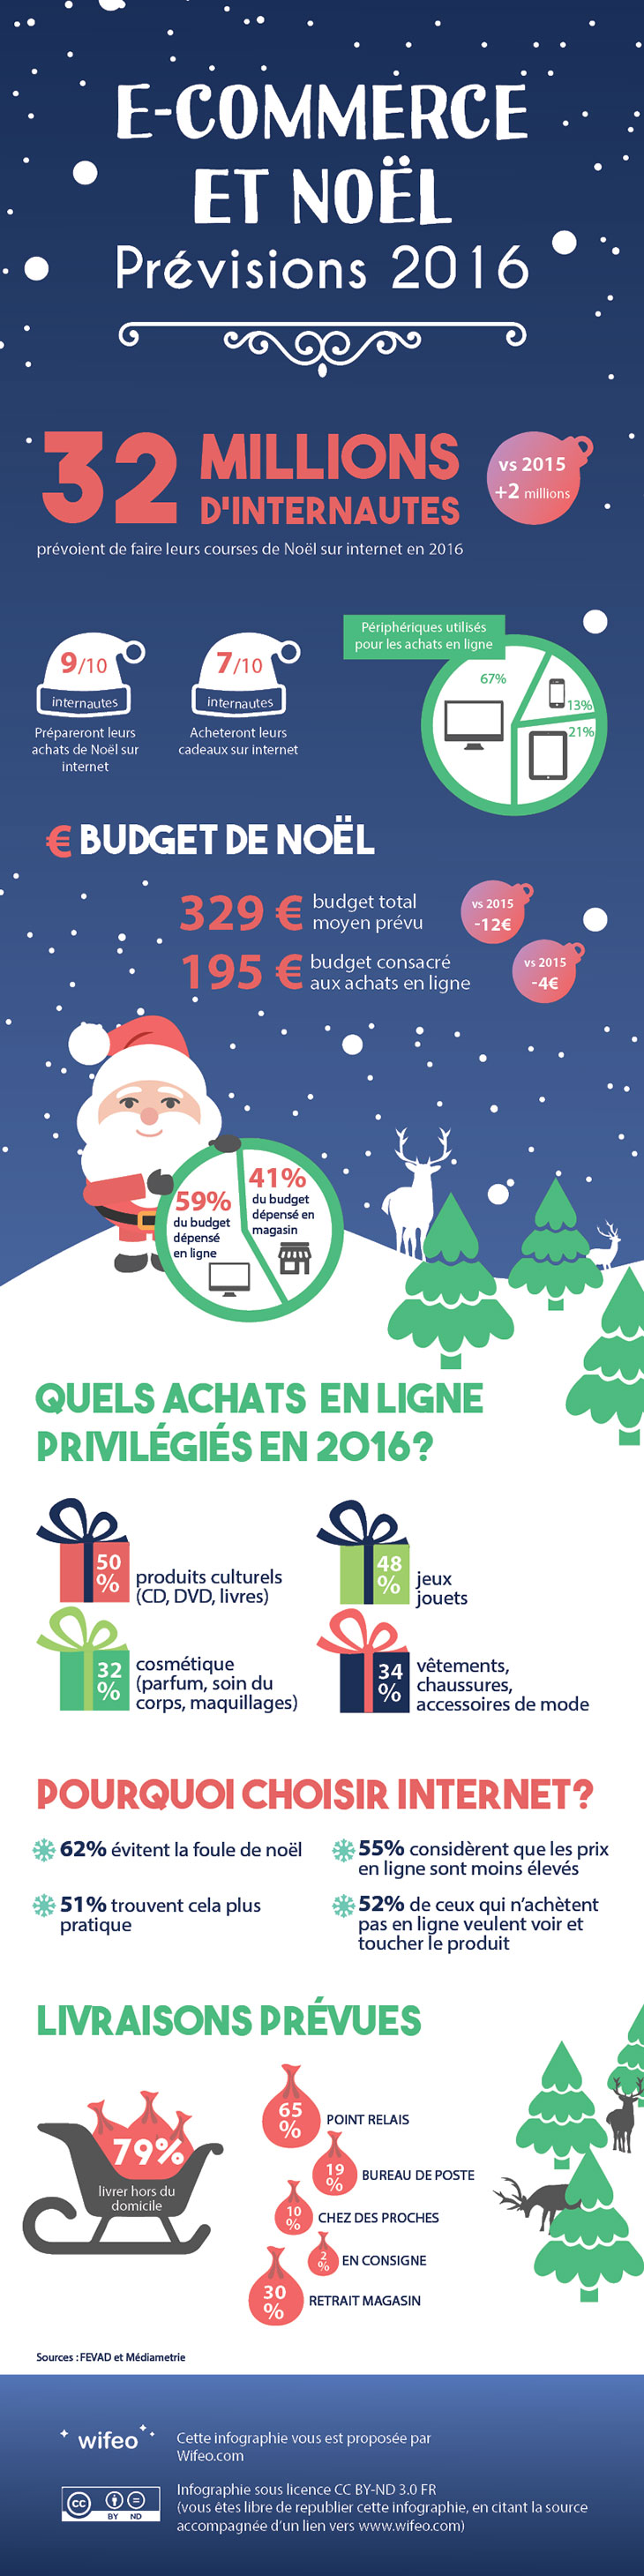 infographie e-commerce Noël - www.journalducm.com